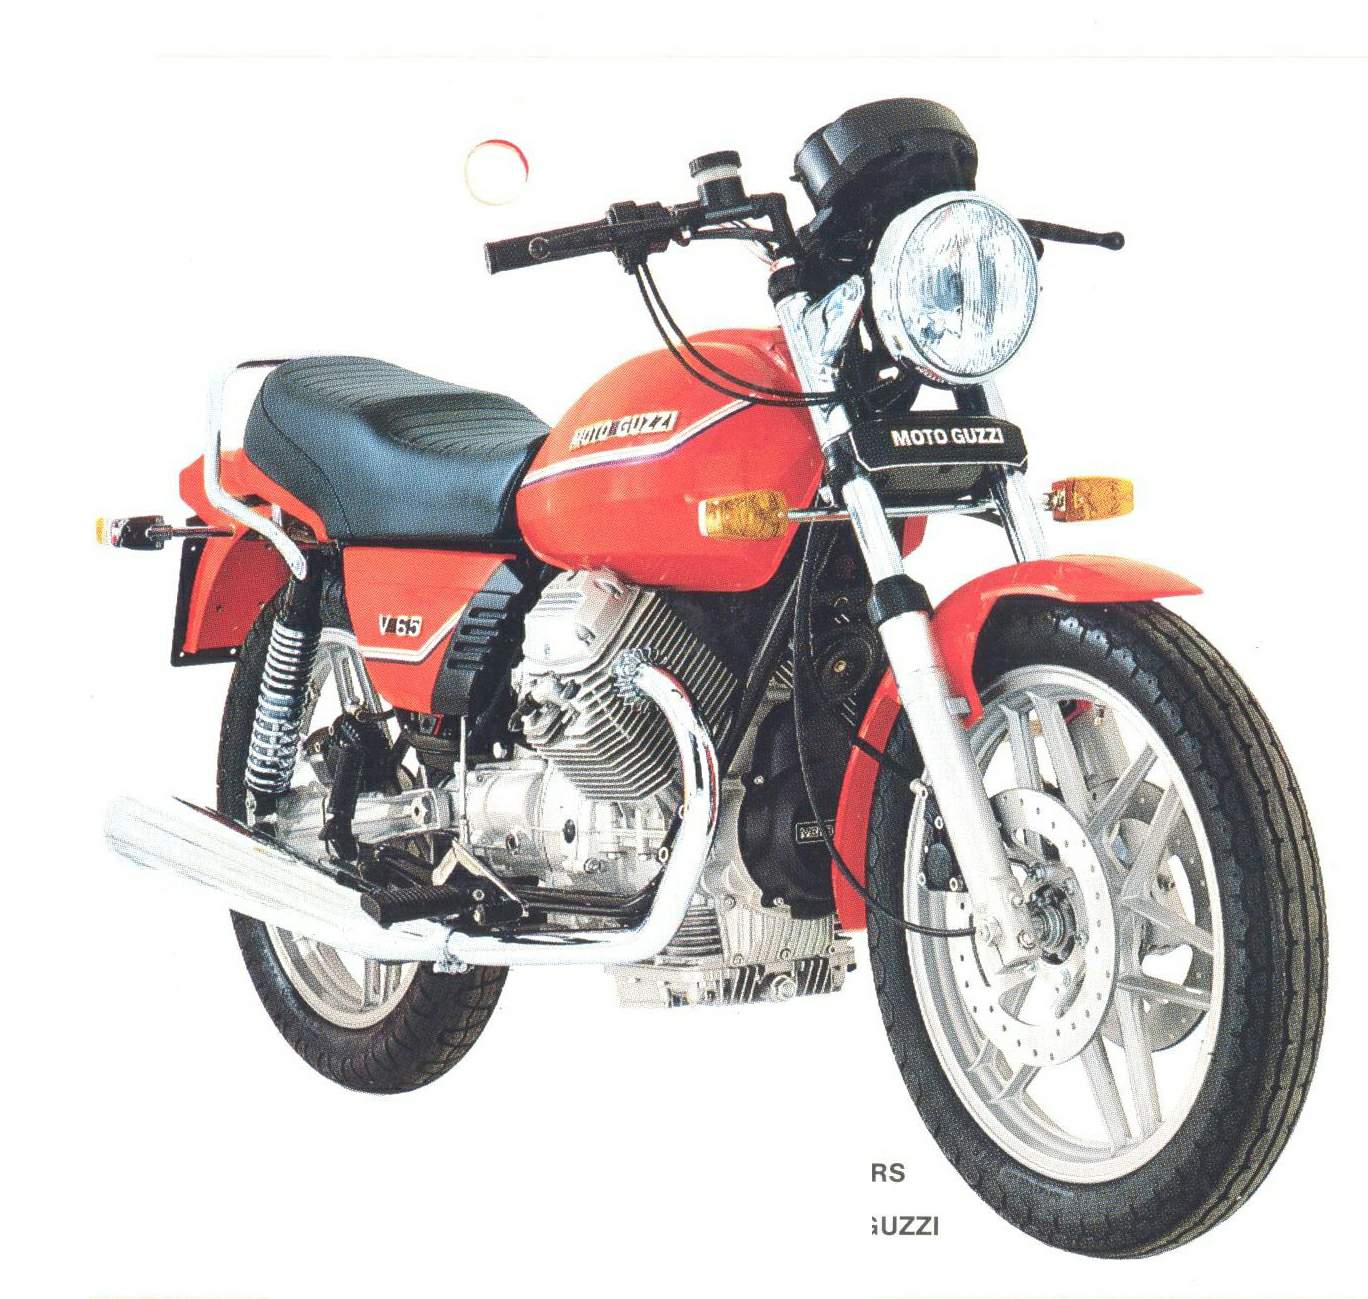 Moto Guzzi V 65 (1982-) especificaciones técnicas